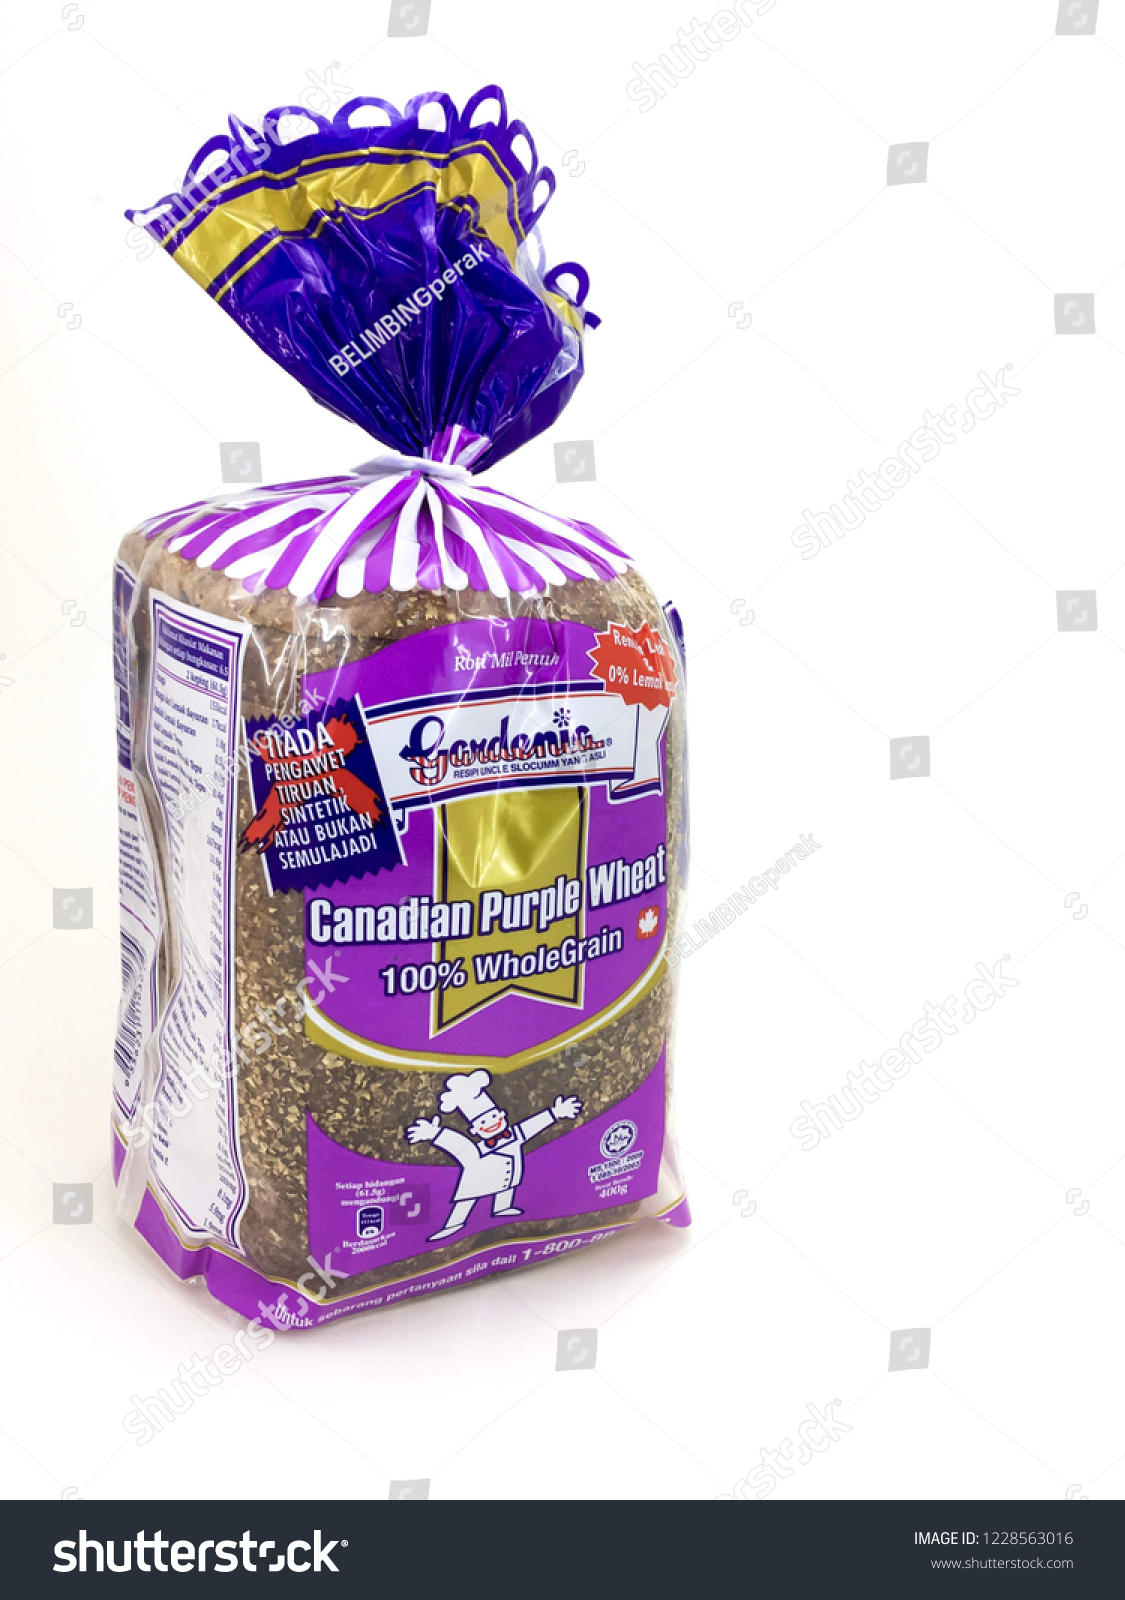 Wheat canadian purple New Canadian